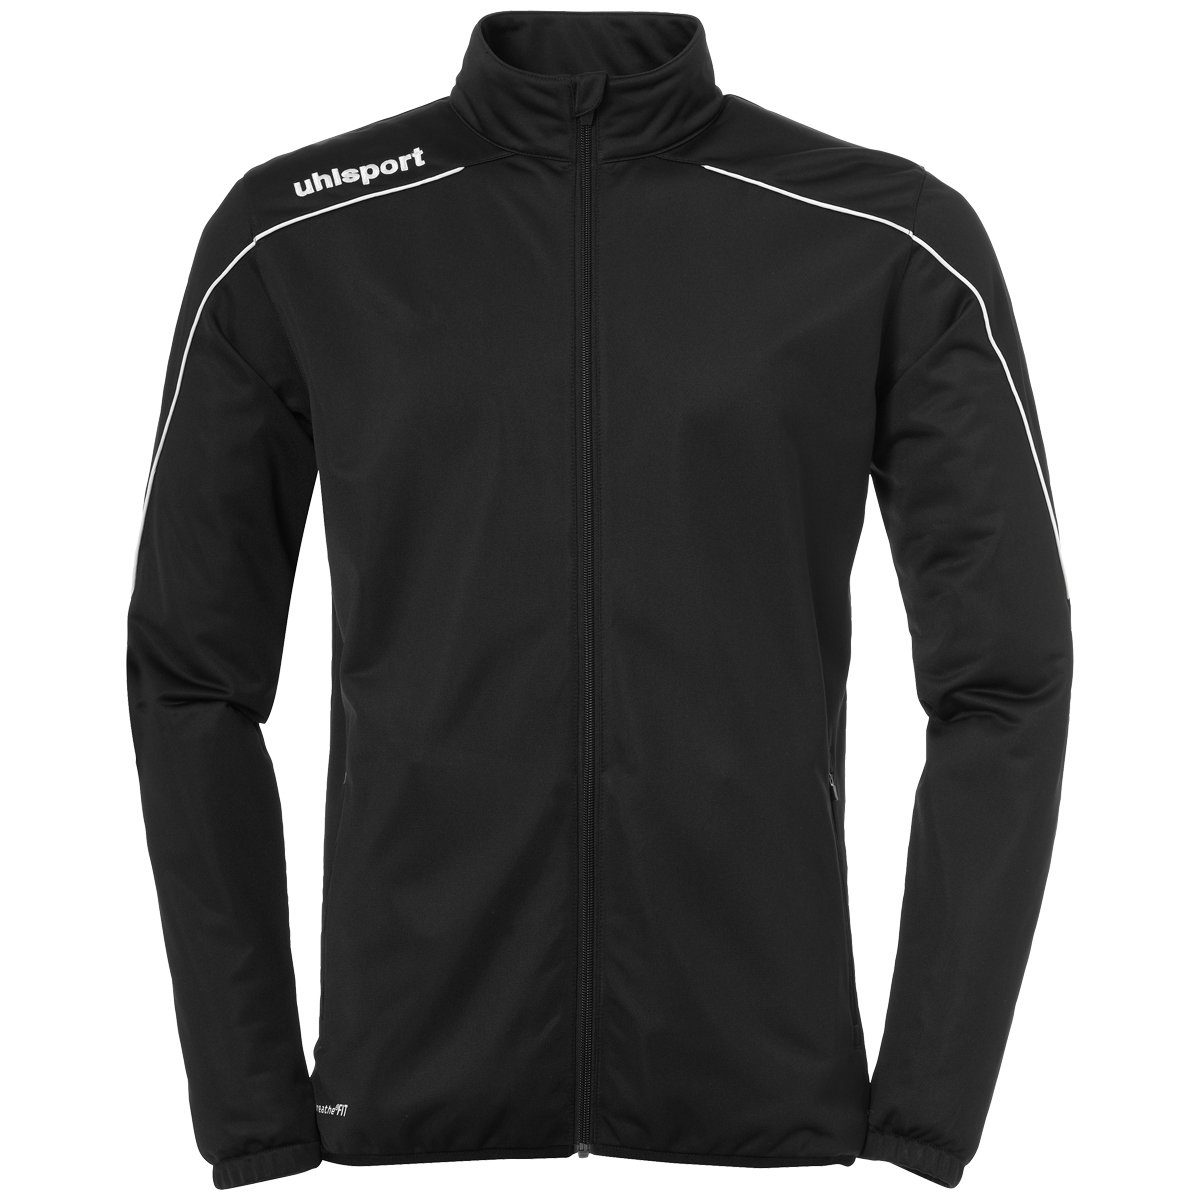 22 STREAM Trainingsjacke Trainingsjacke schwarz/weiß uhlsport uhlsport